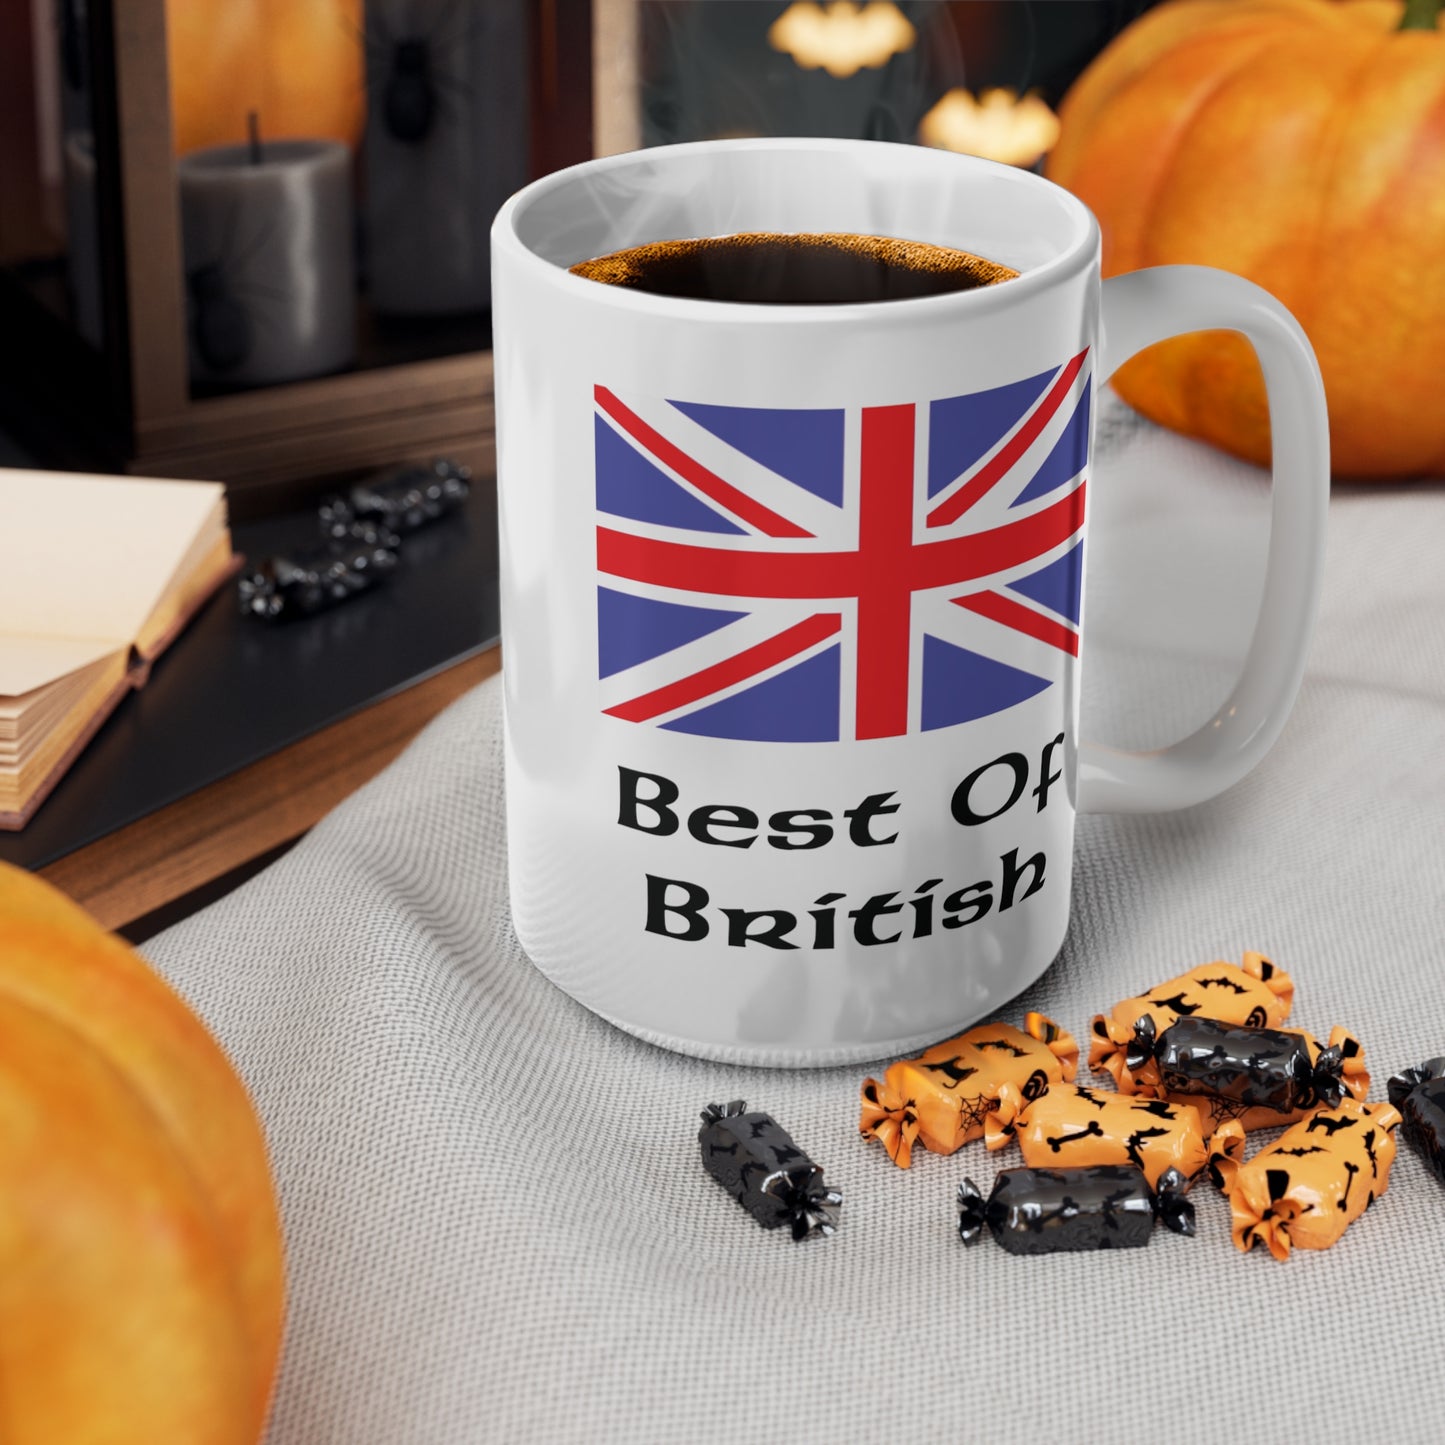 Best of British Union Jack Flag Coffee Mug